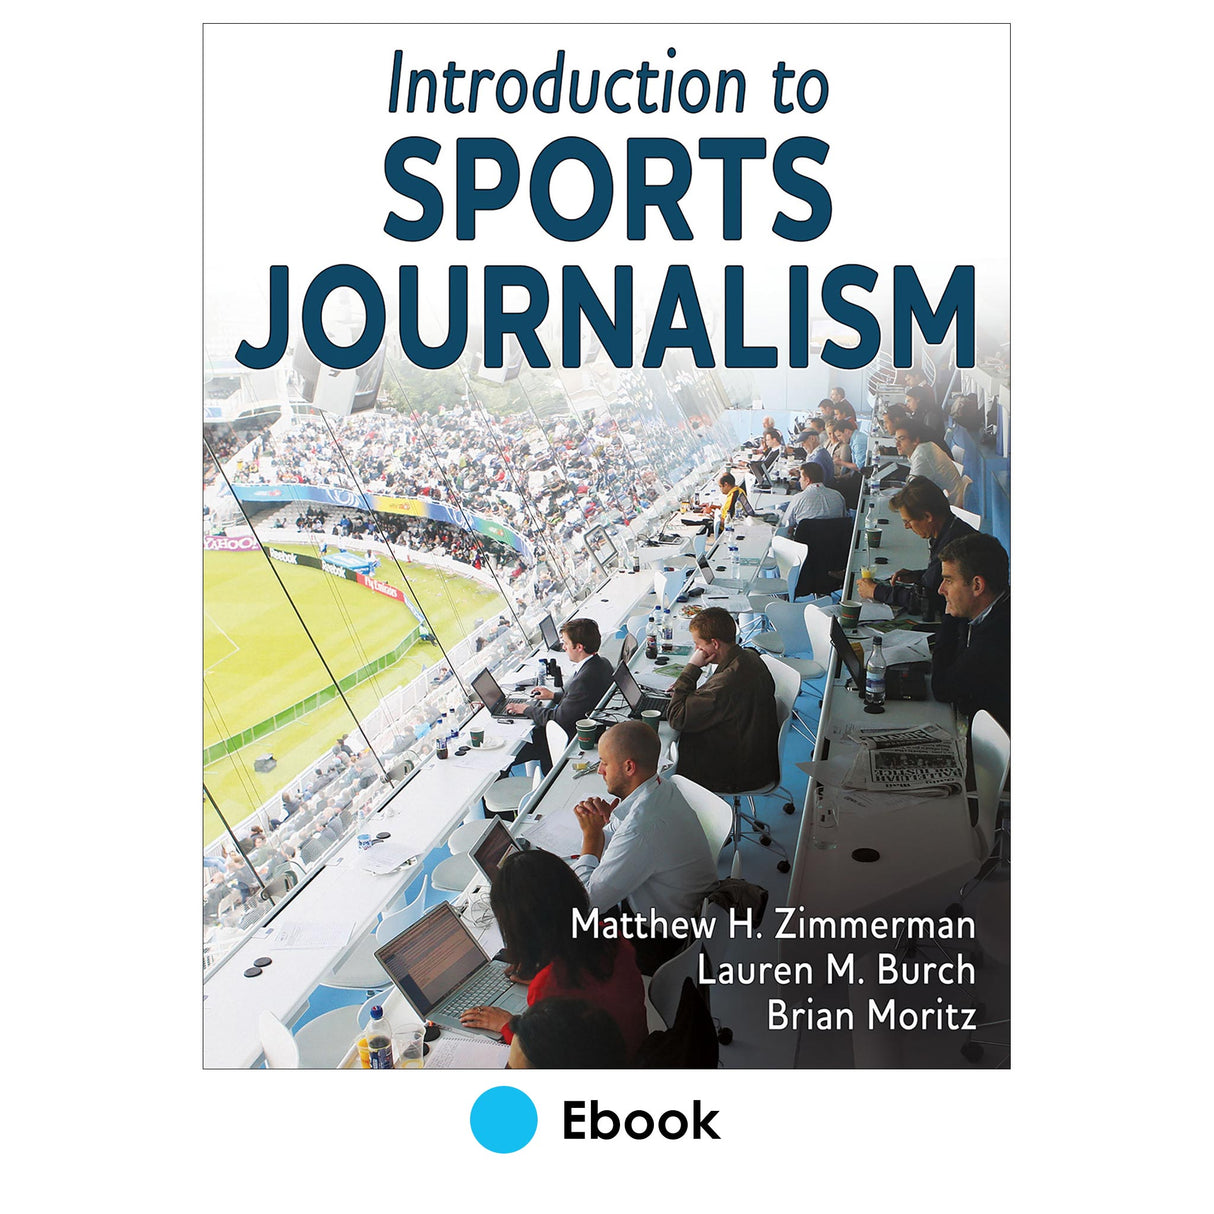 Introduction to Sports Journalism epub